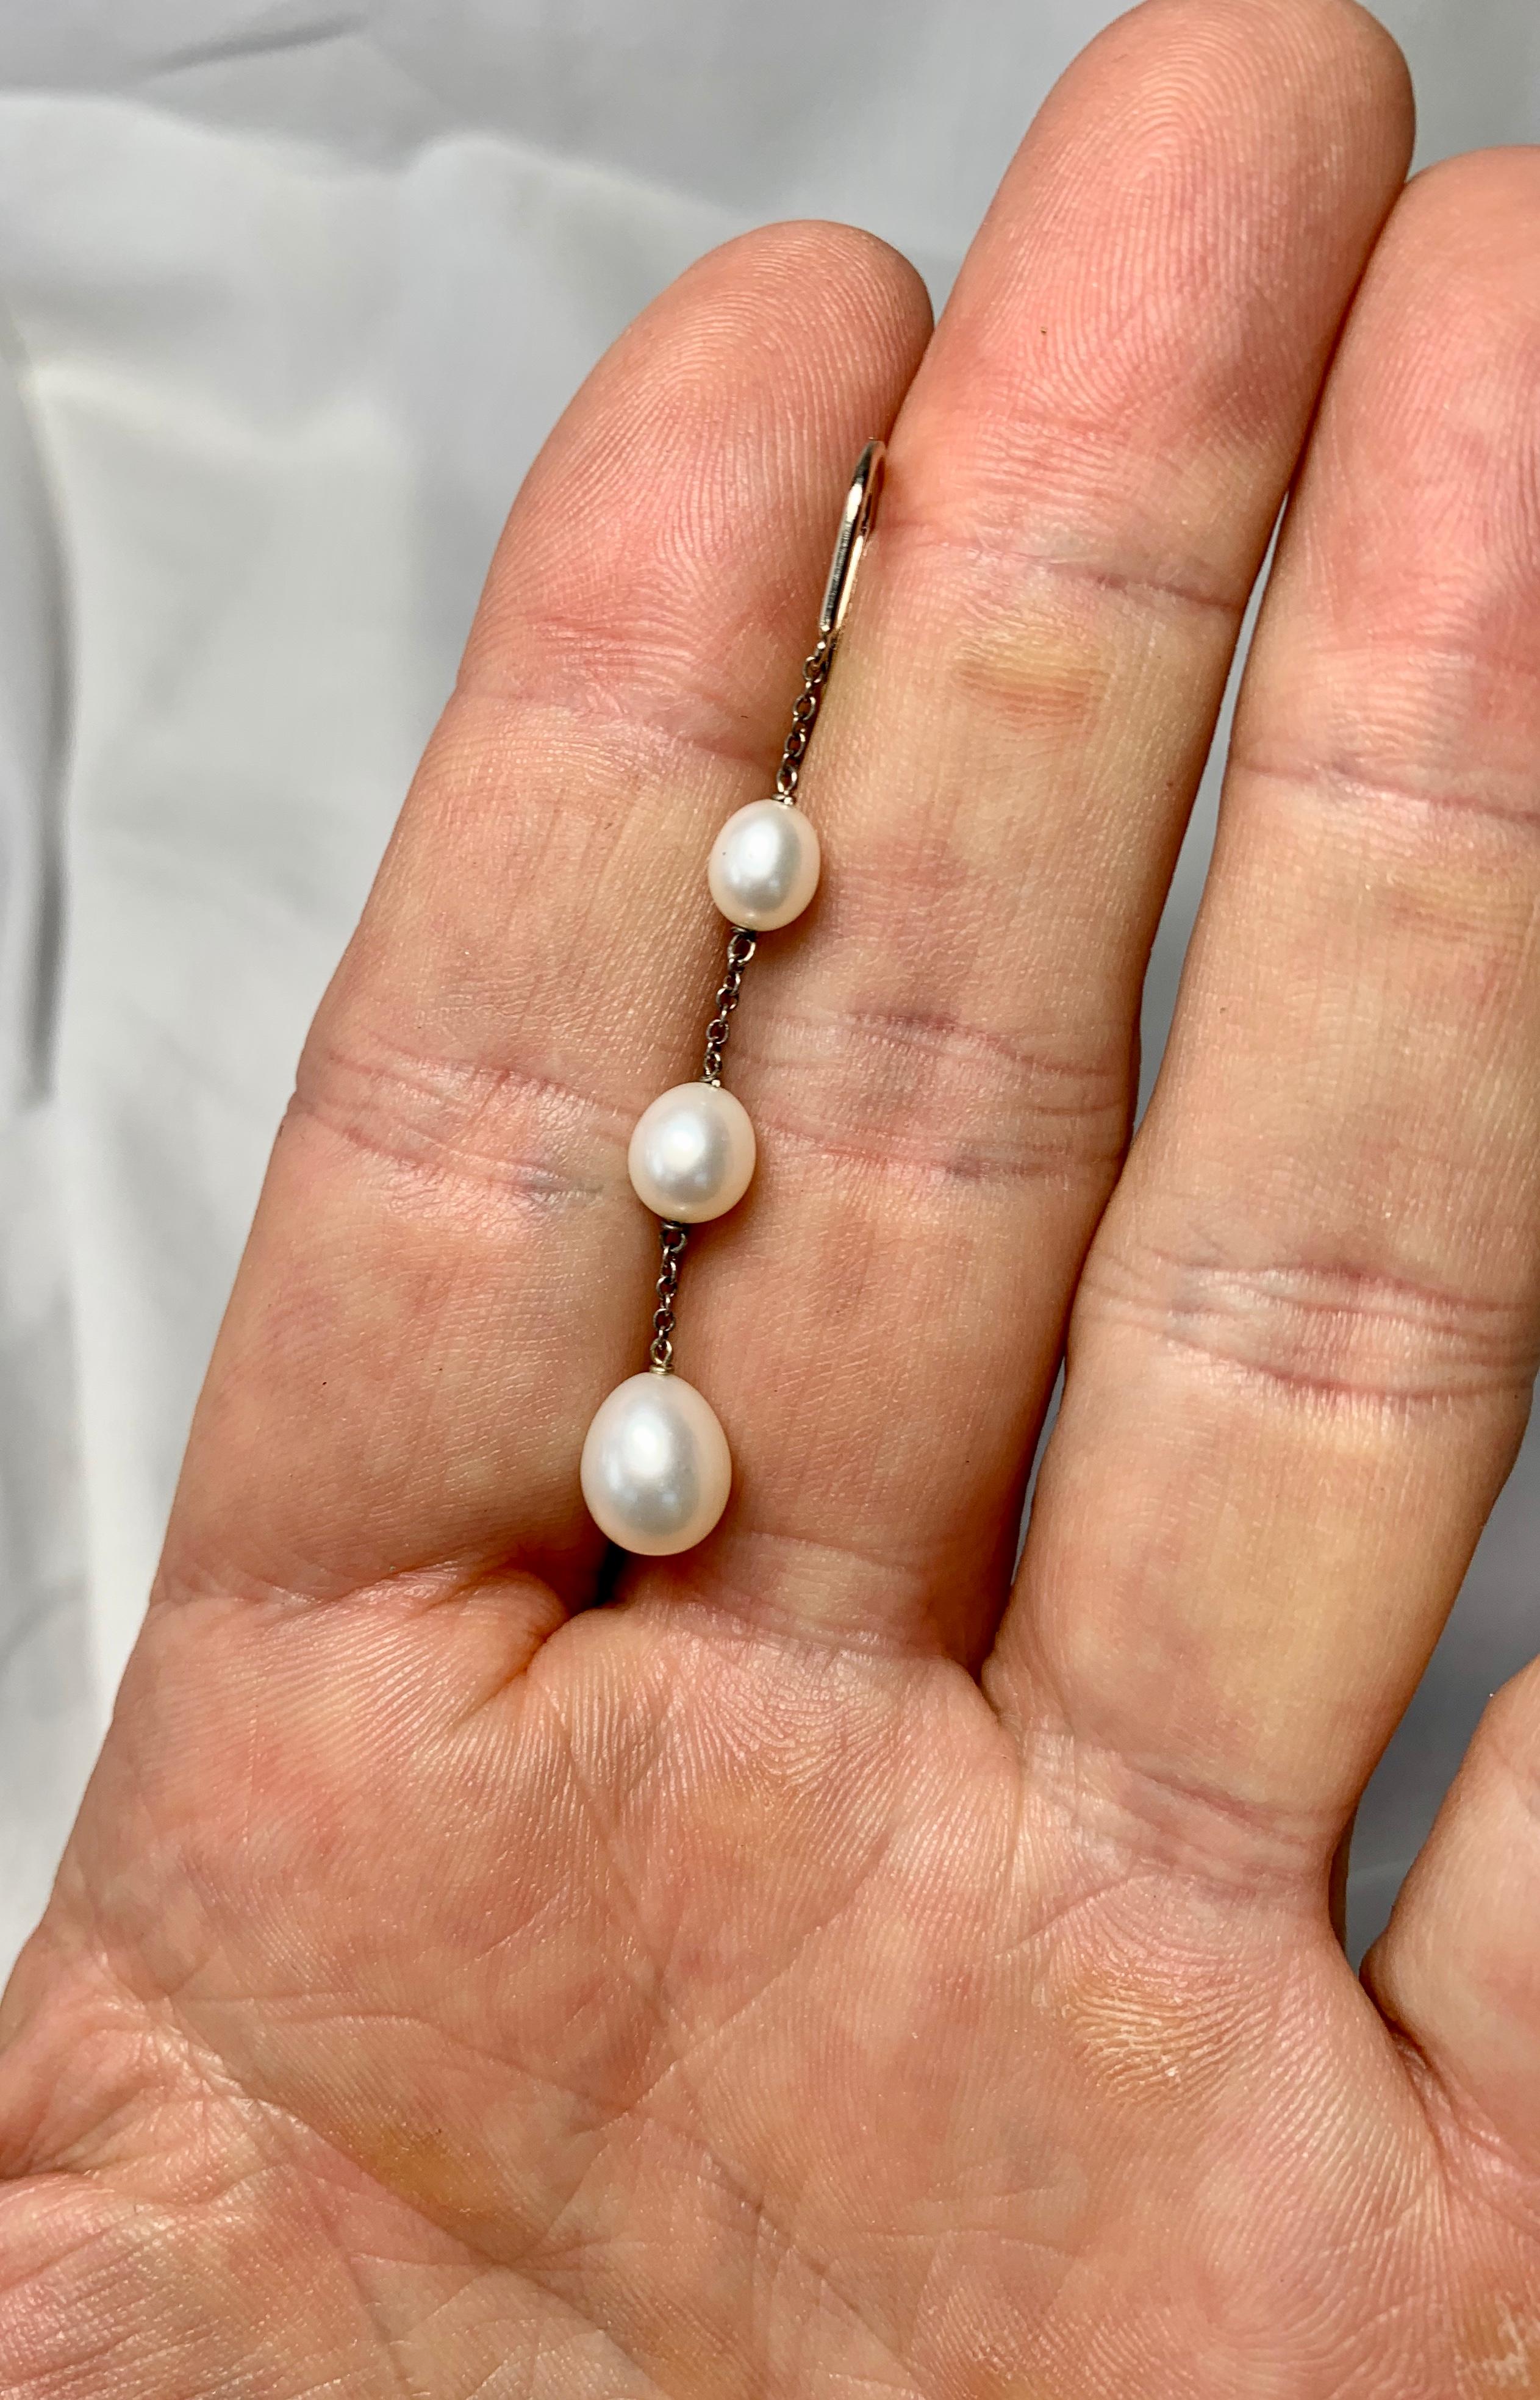 elsa peretti pearls by the yard earrings